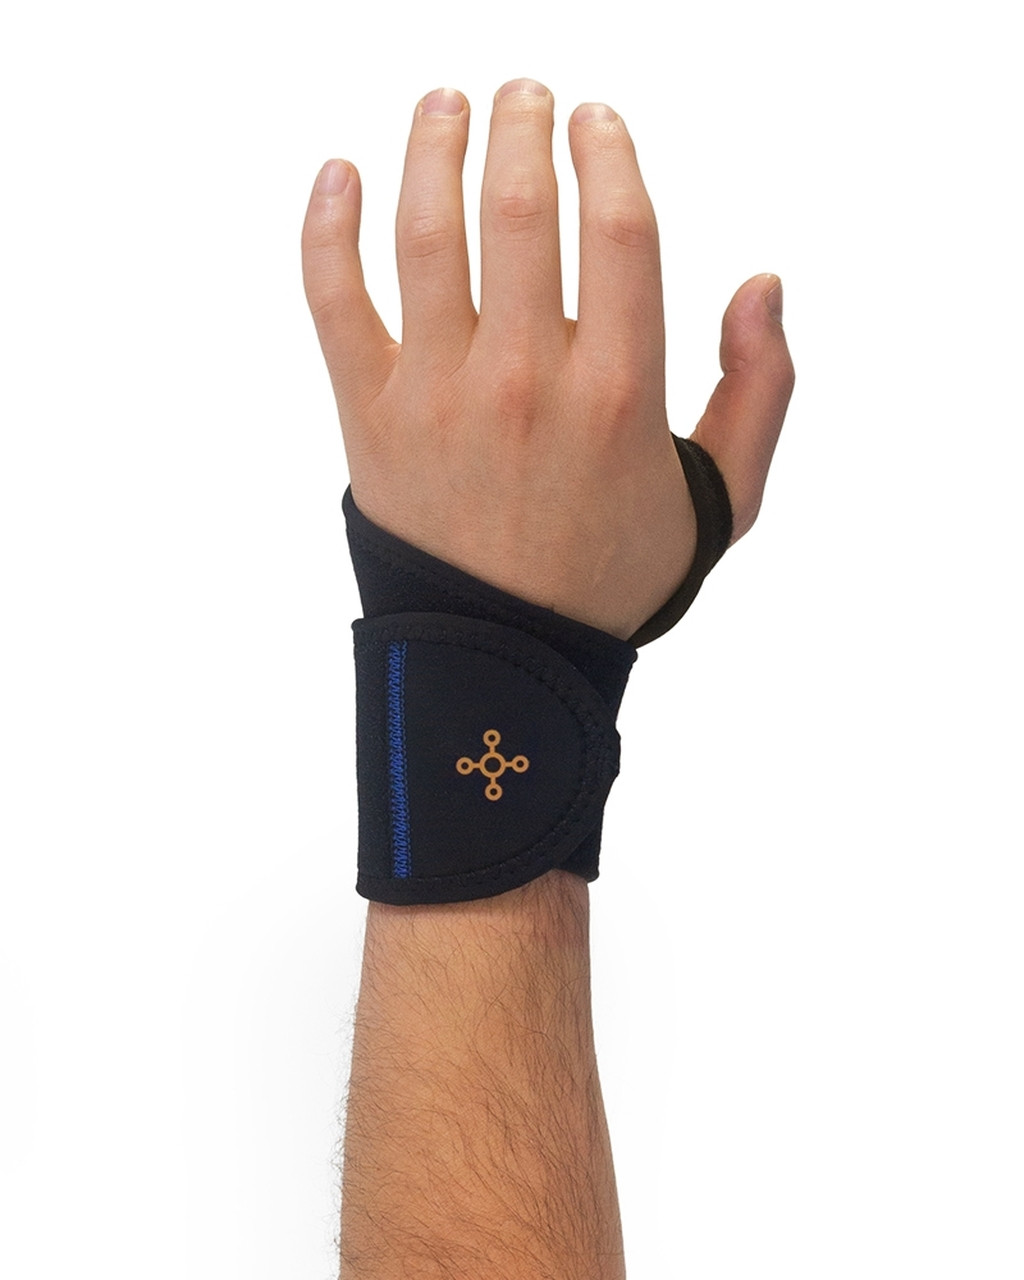 Copper Wrist Compression Brace (2Pcs), Elastic Wrist Support Sleeve Wrist  Braces For Arthritis, Carpal Tunnel Pain Relief, Soft Wrist Wrap Wristbands